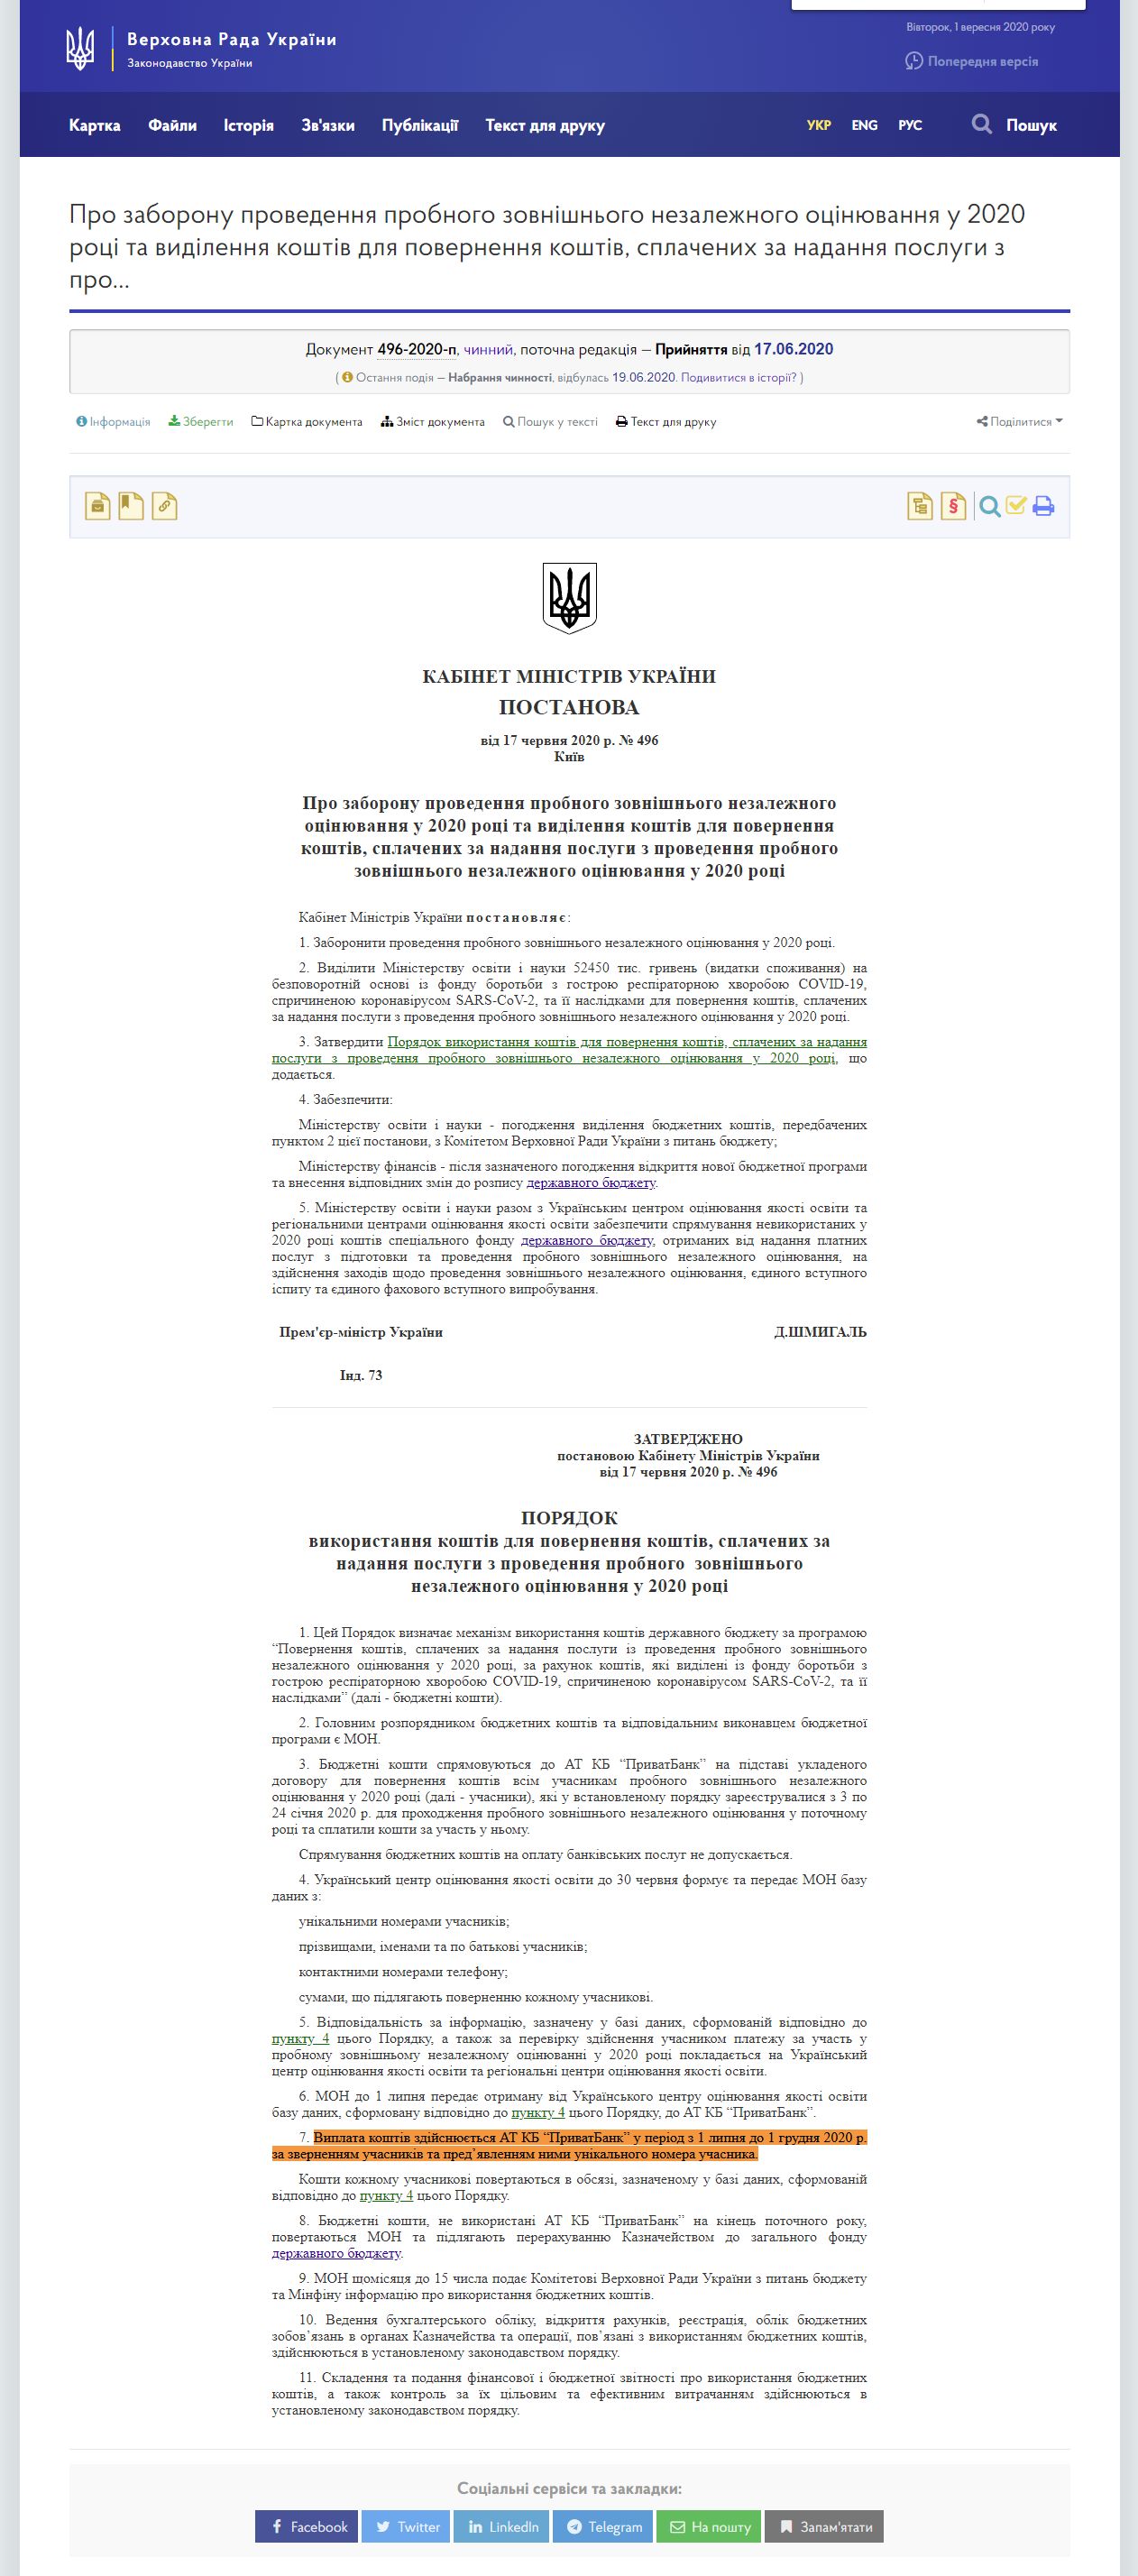 https://zakon.rada.gov.ua/laws/show/496-2020-%D0%BF#Text